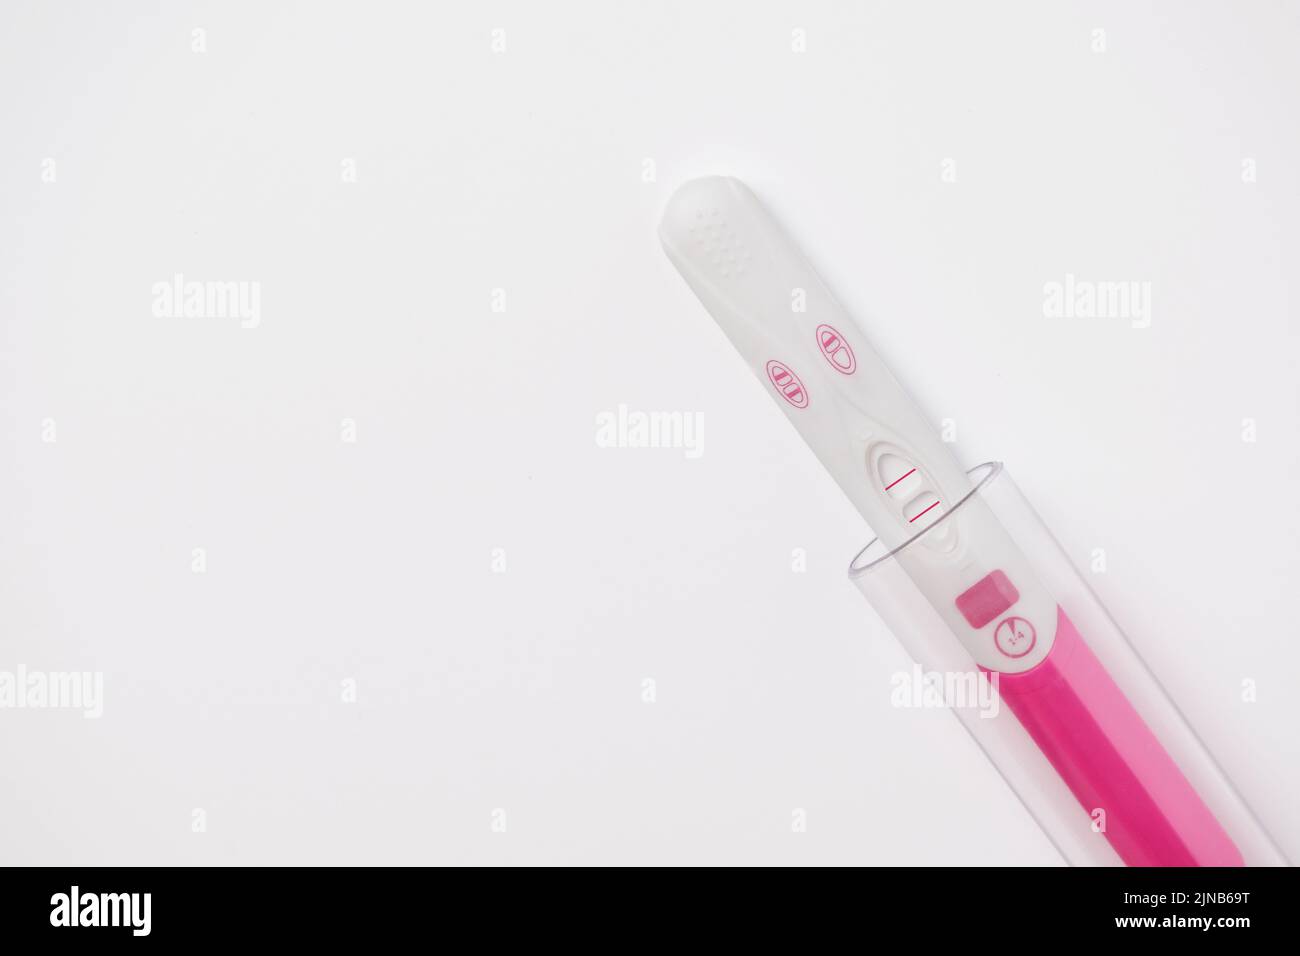 Positive pregnancy test with laboratory test tube. In vitro fertilization, artificial insemination and infertility treatment concept. Stock Photo